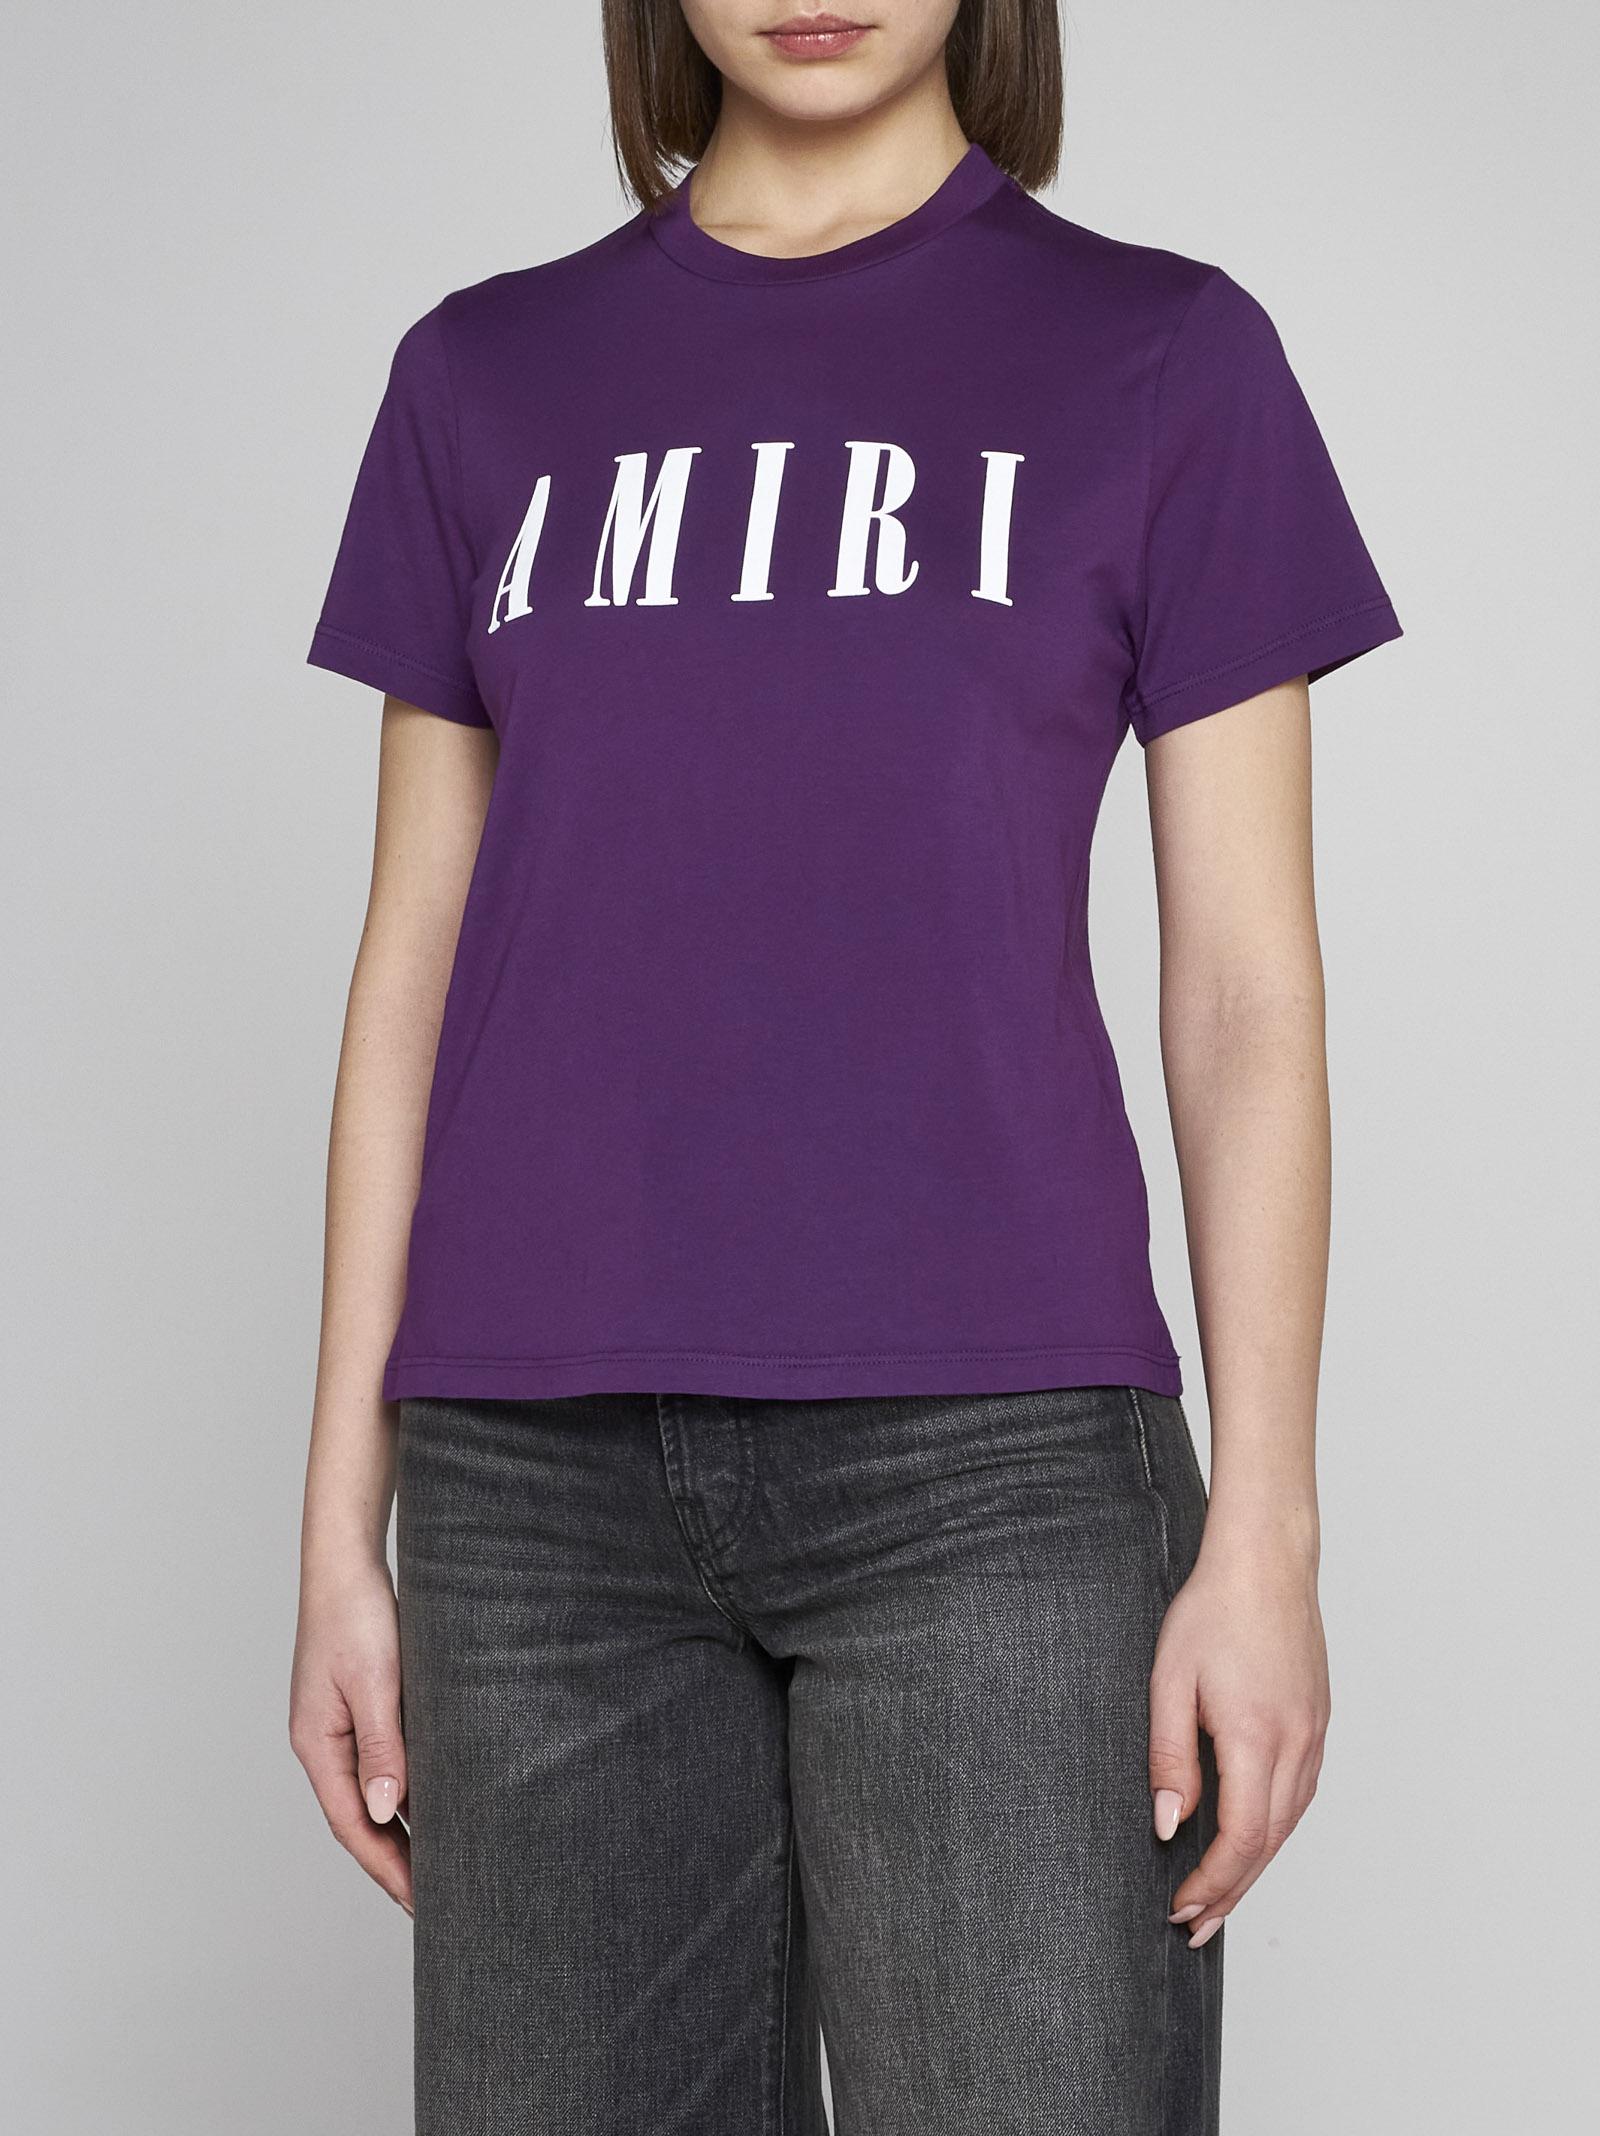 Amiri Logo Cotton T-shirt in Purple | Lyst